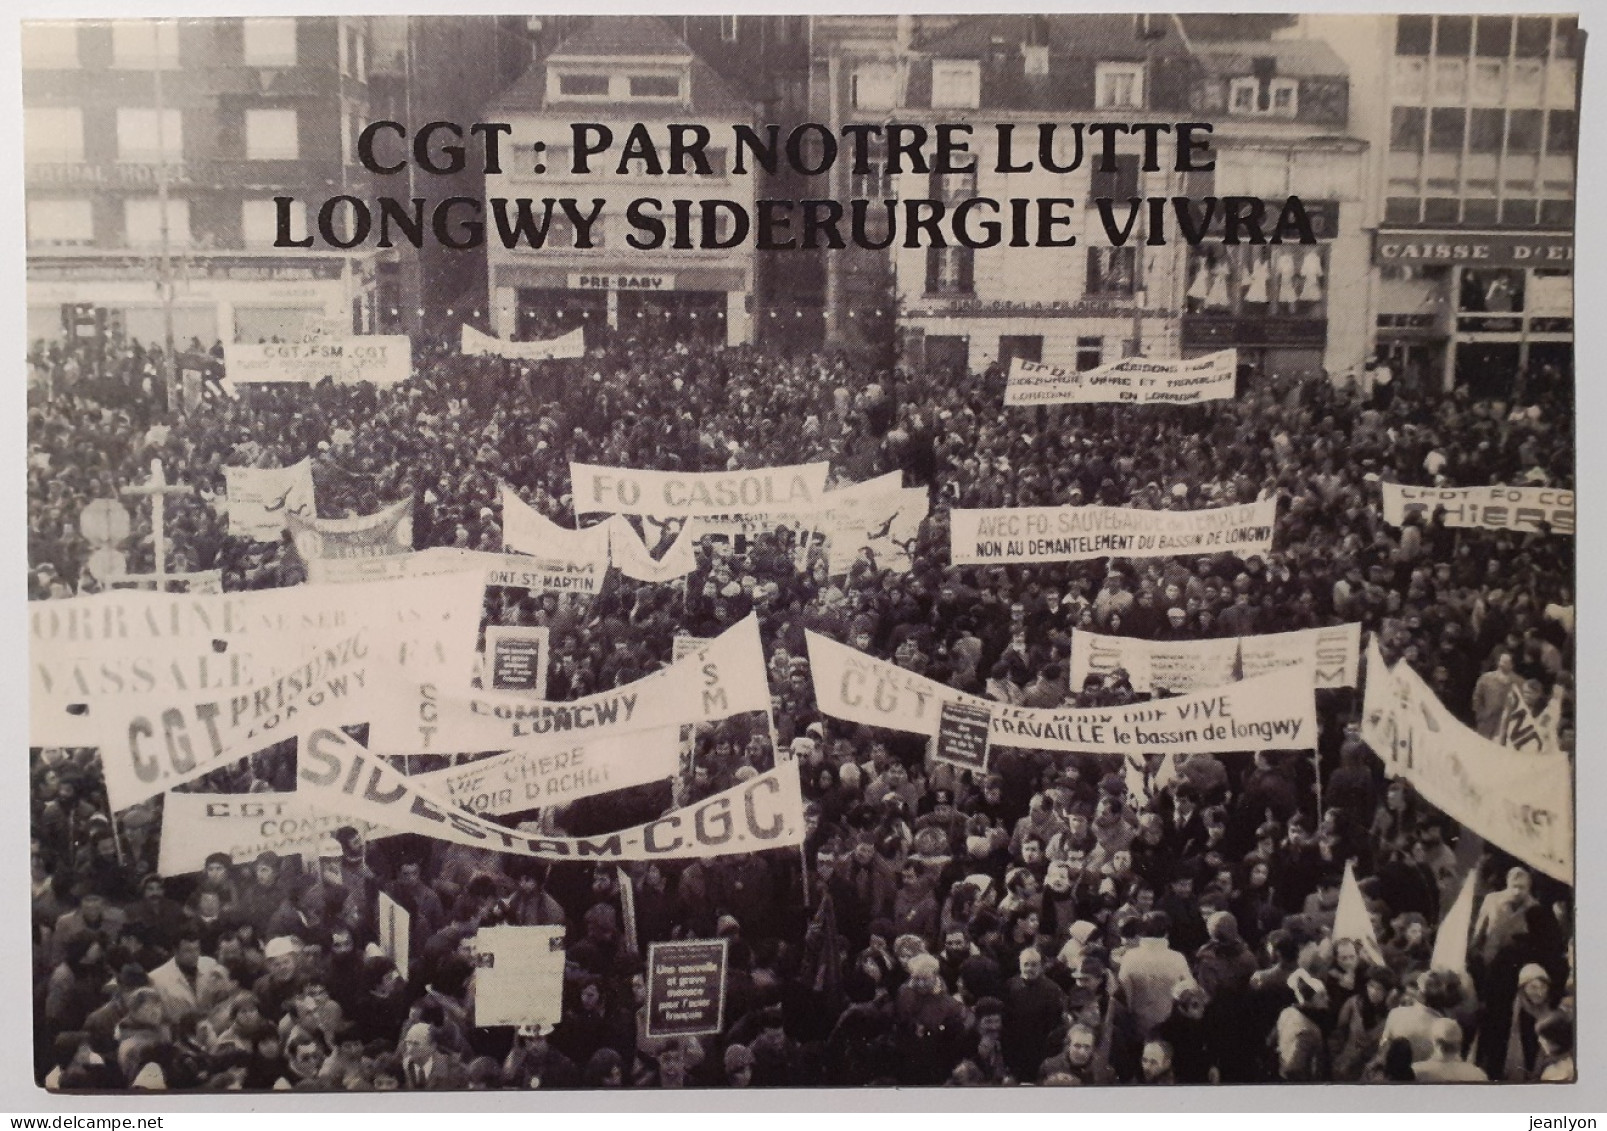 LONGWY (54 Meurthe Et Moselle) - Syndicat CGT / Manifestation 19 Décembre 1978 - Banderoles  - Demonstrations